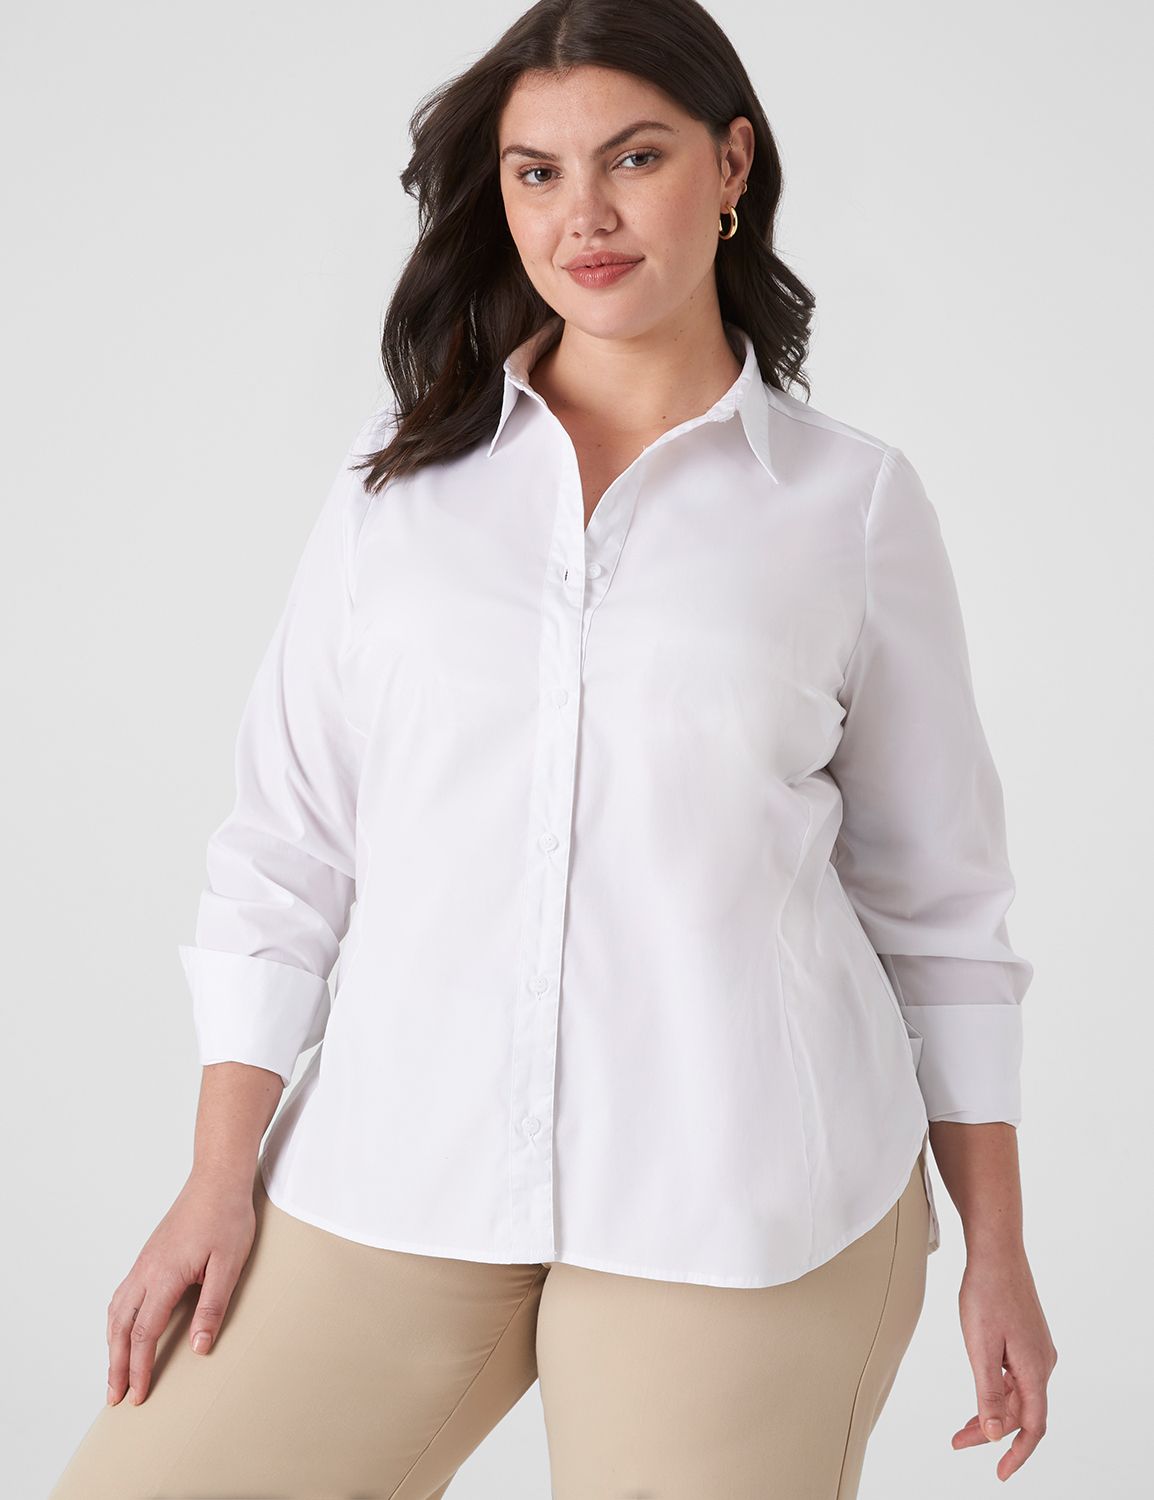 Lane Bryant Classic Button-Front Girlfriend Shirt 18 White